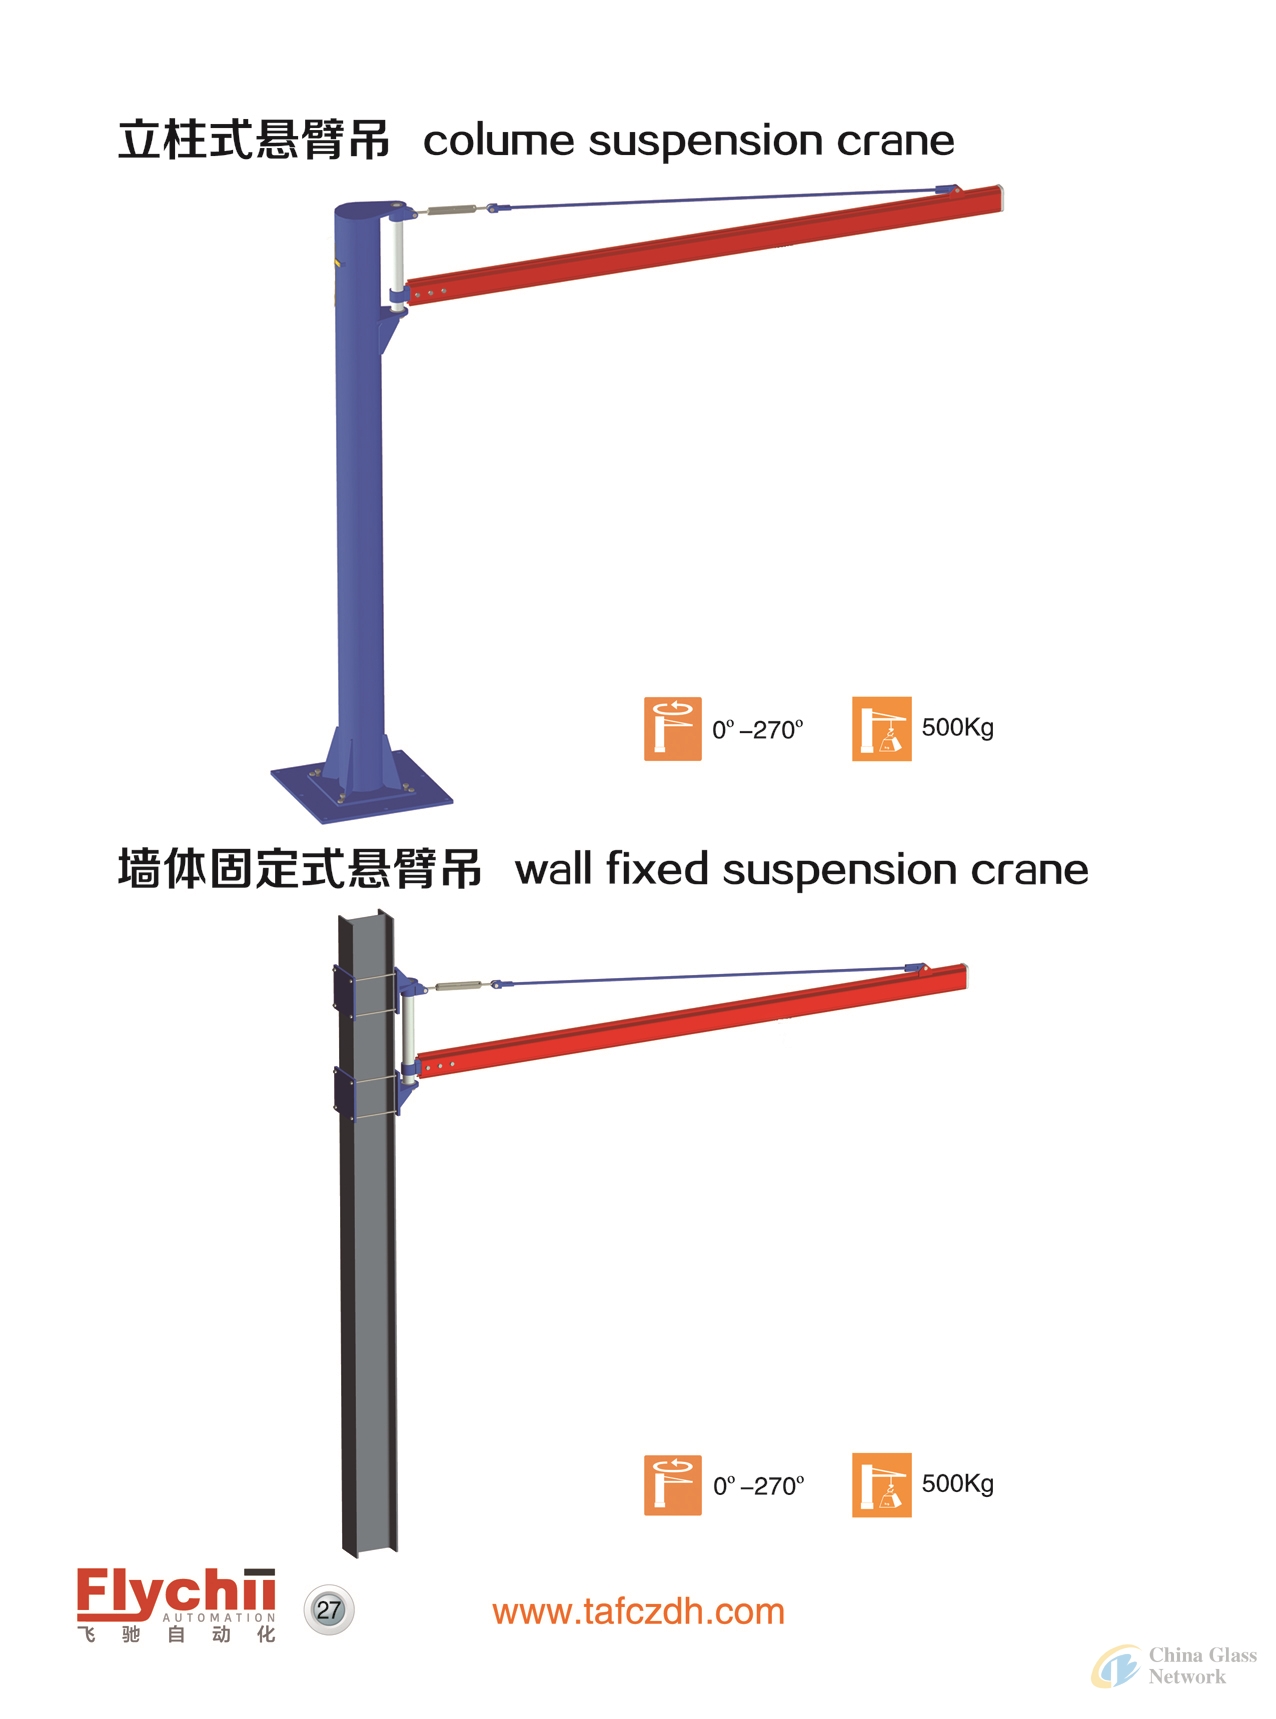 column suspension crane, wall fixed suspension crane